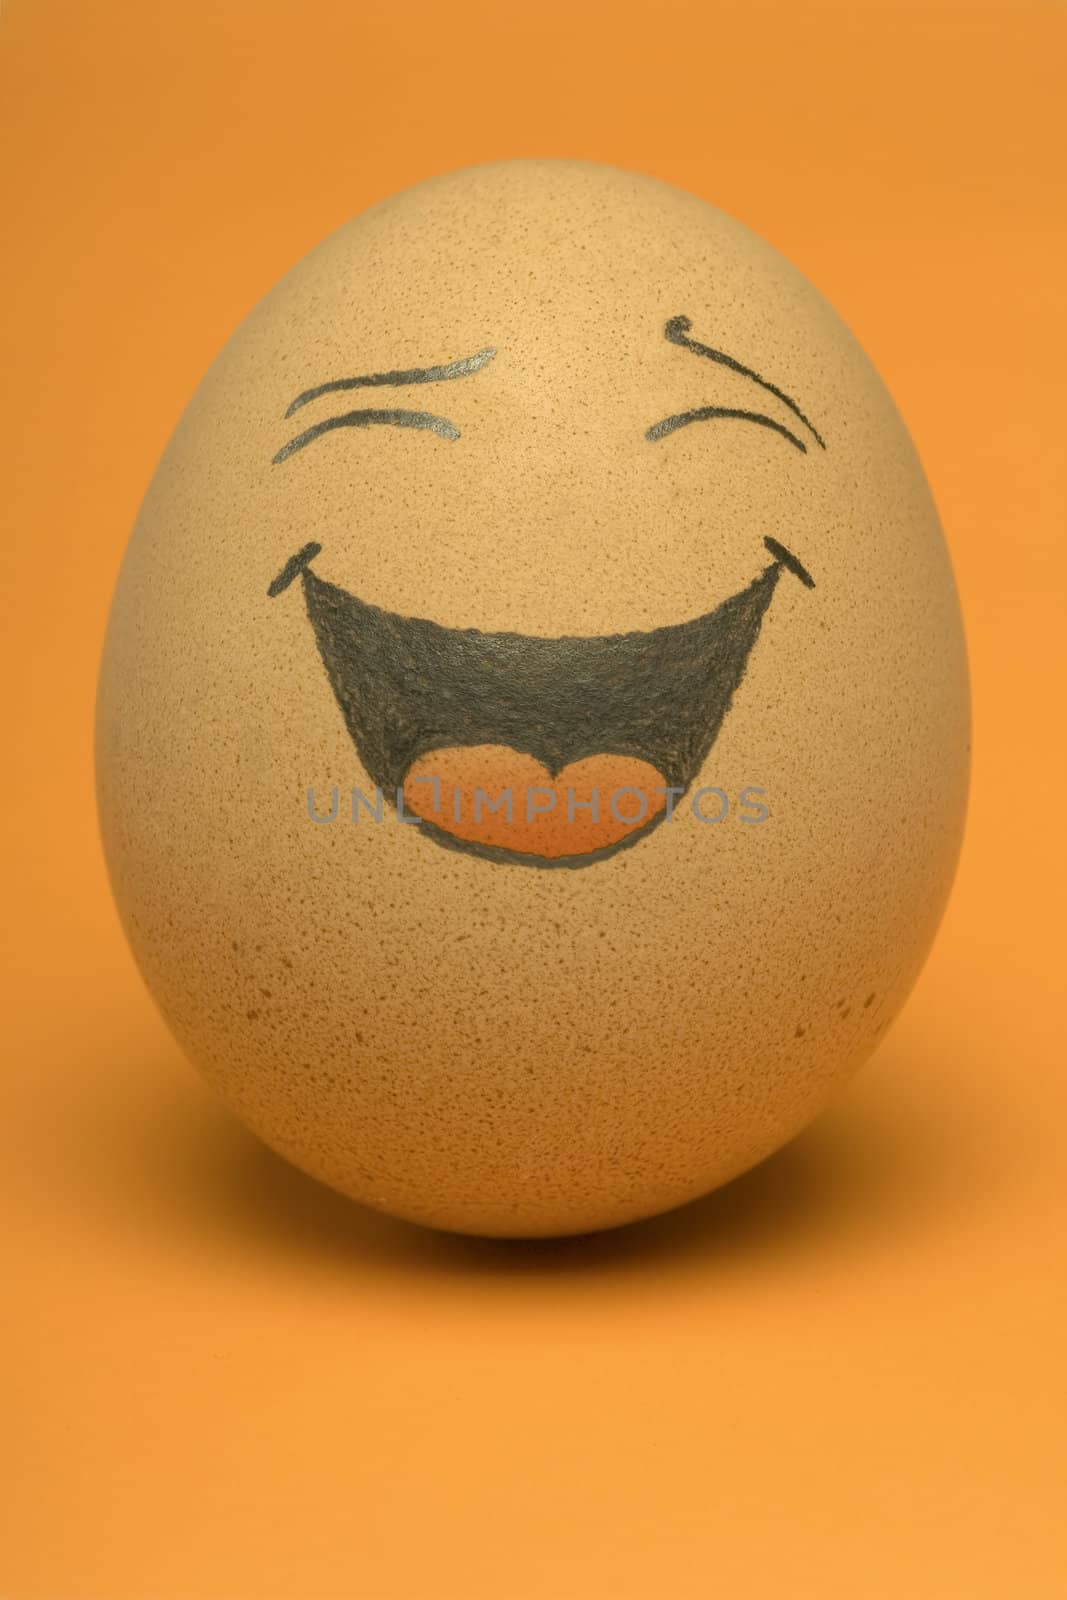 Single, Smiling comical Egg with orange background.